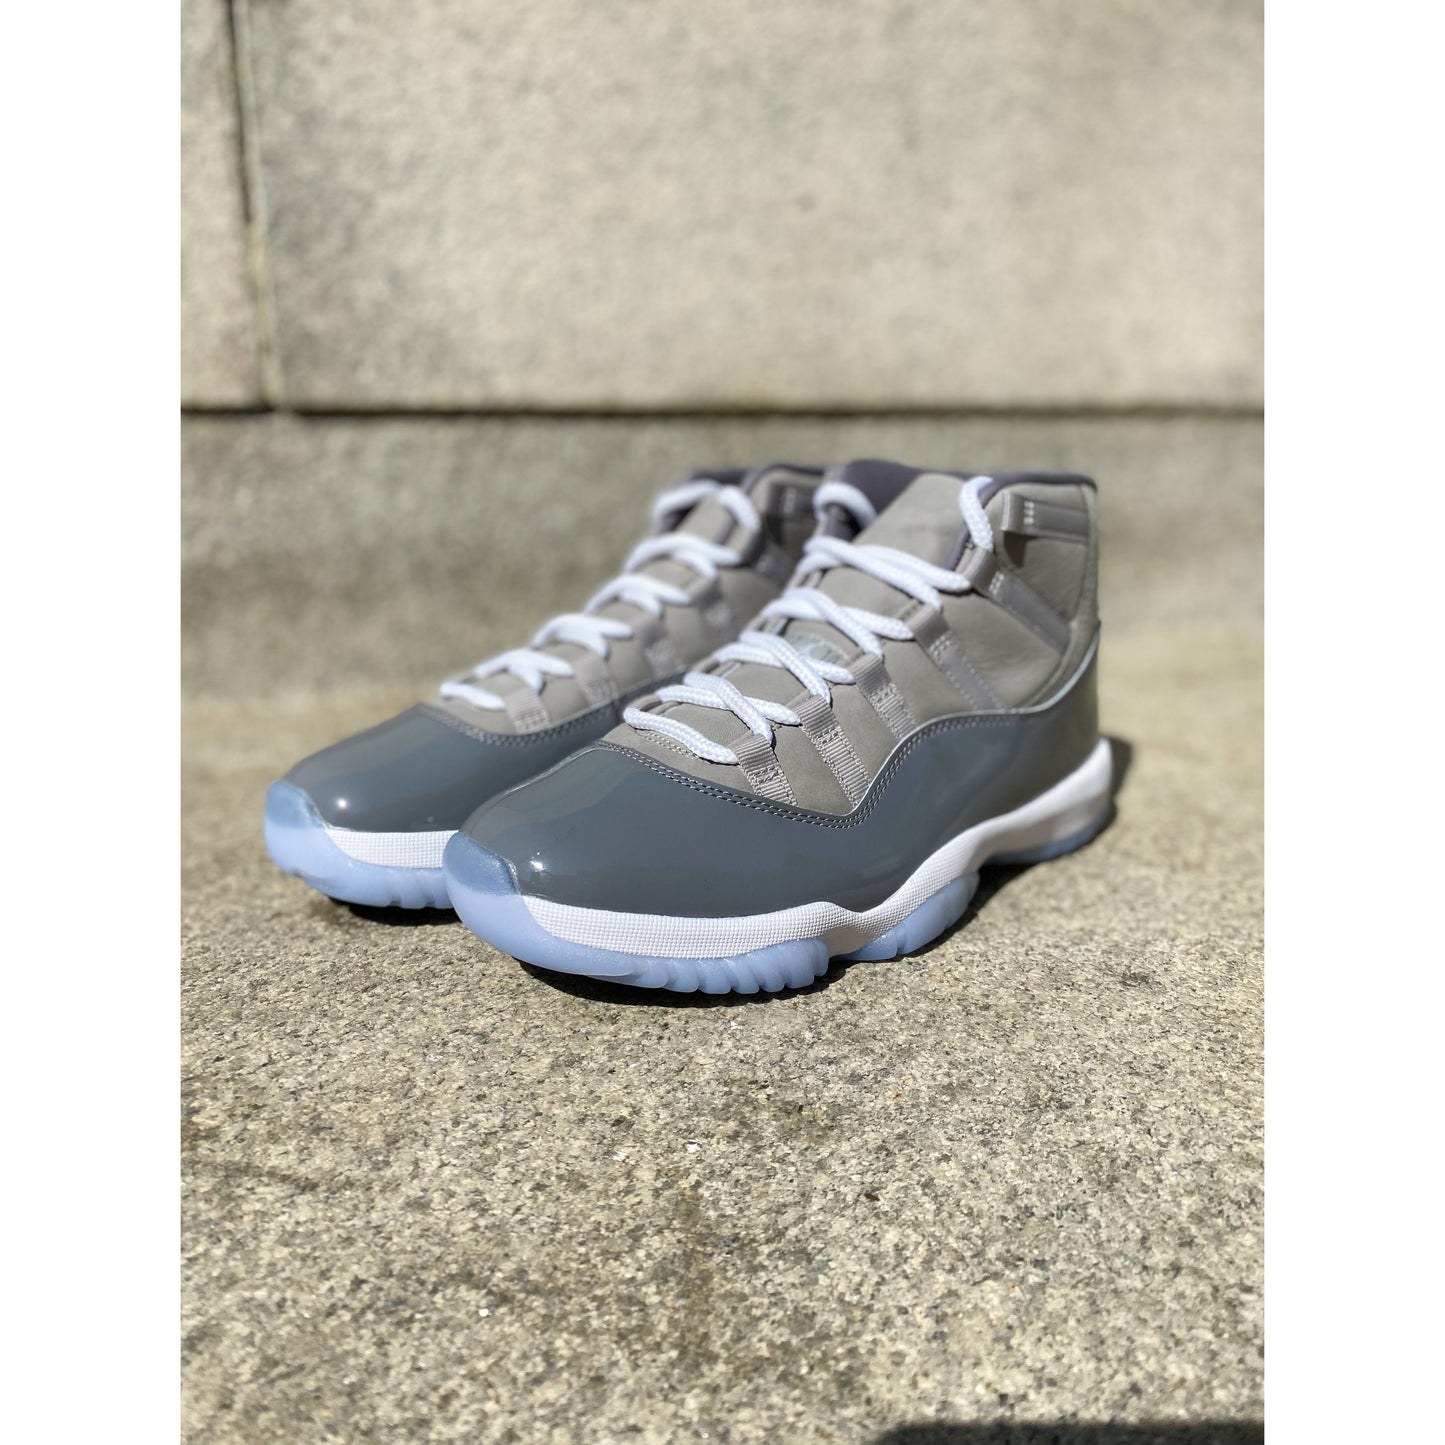 Jordan 11 Retro Cool Grey (2021) by Jordan's from £257.00